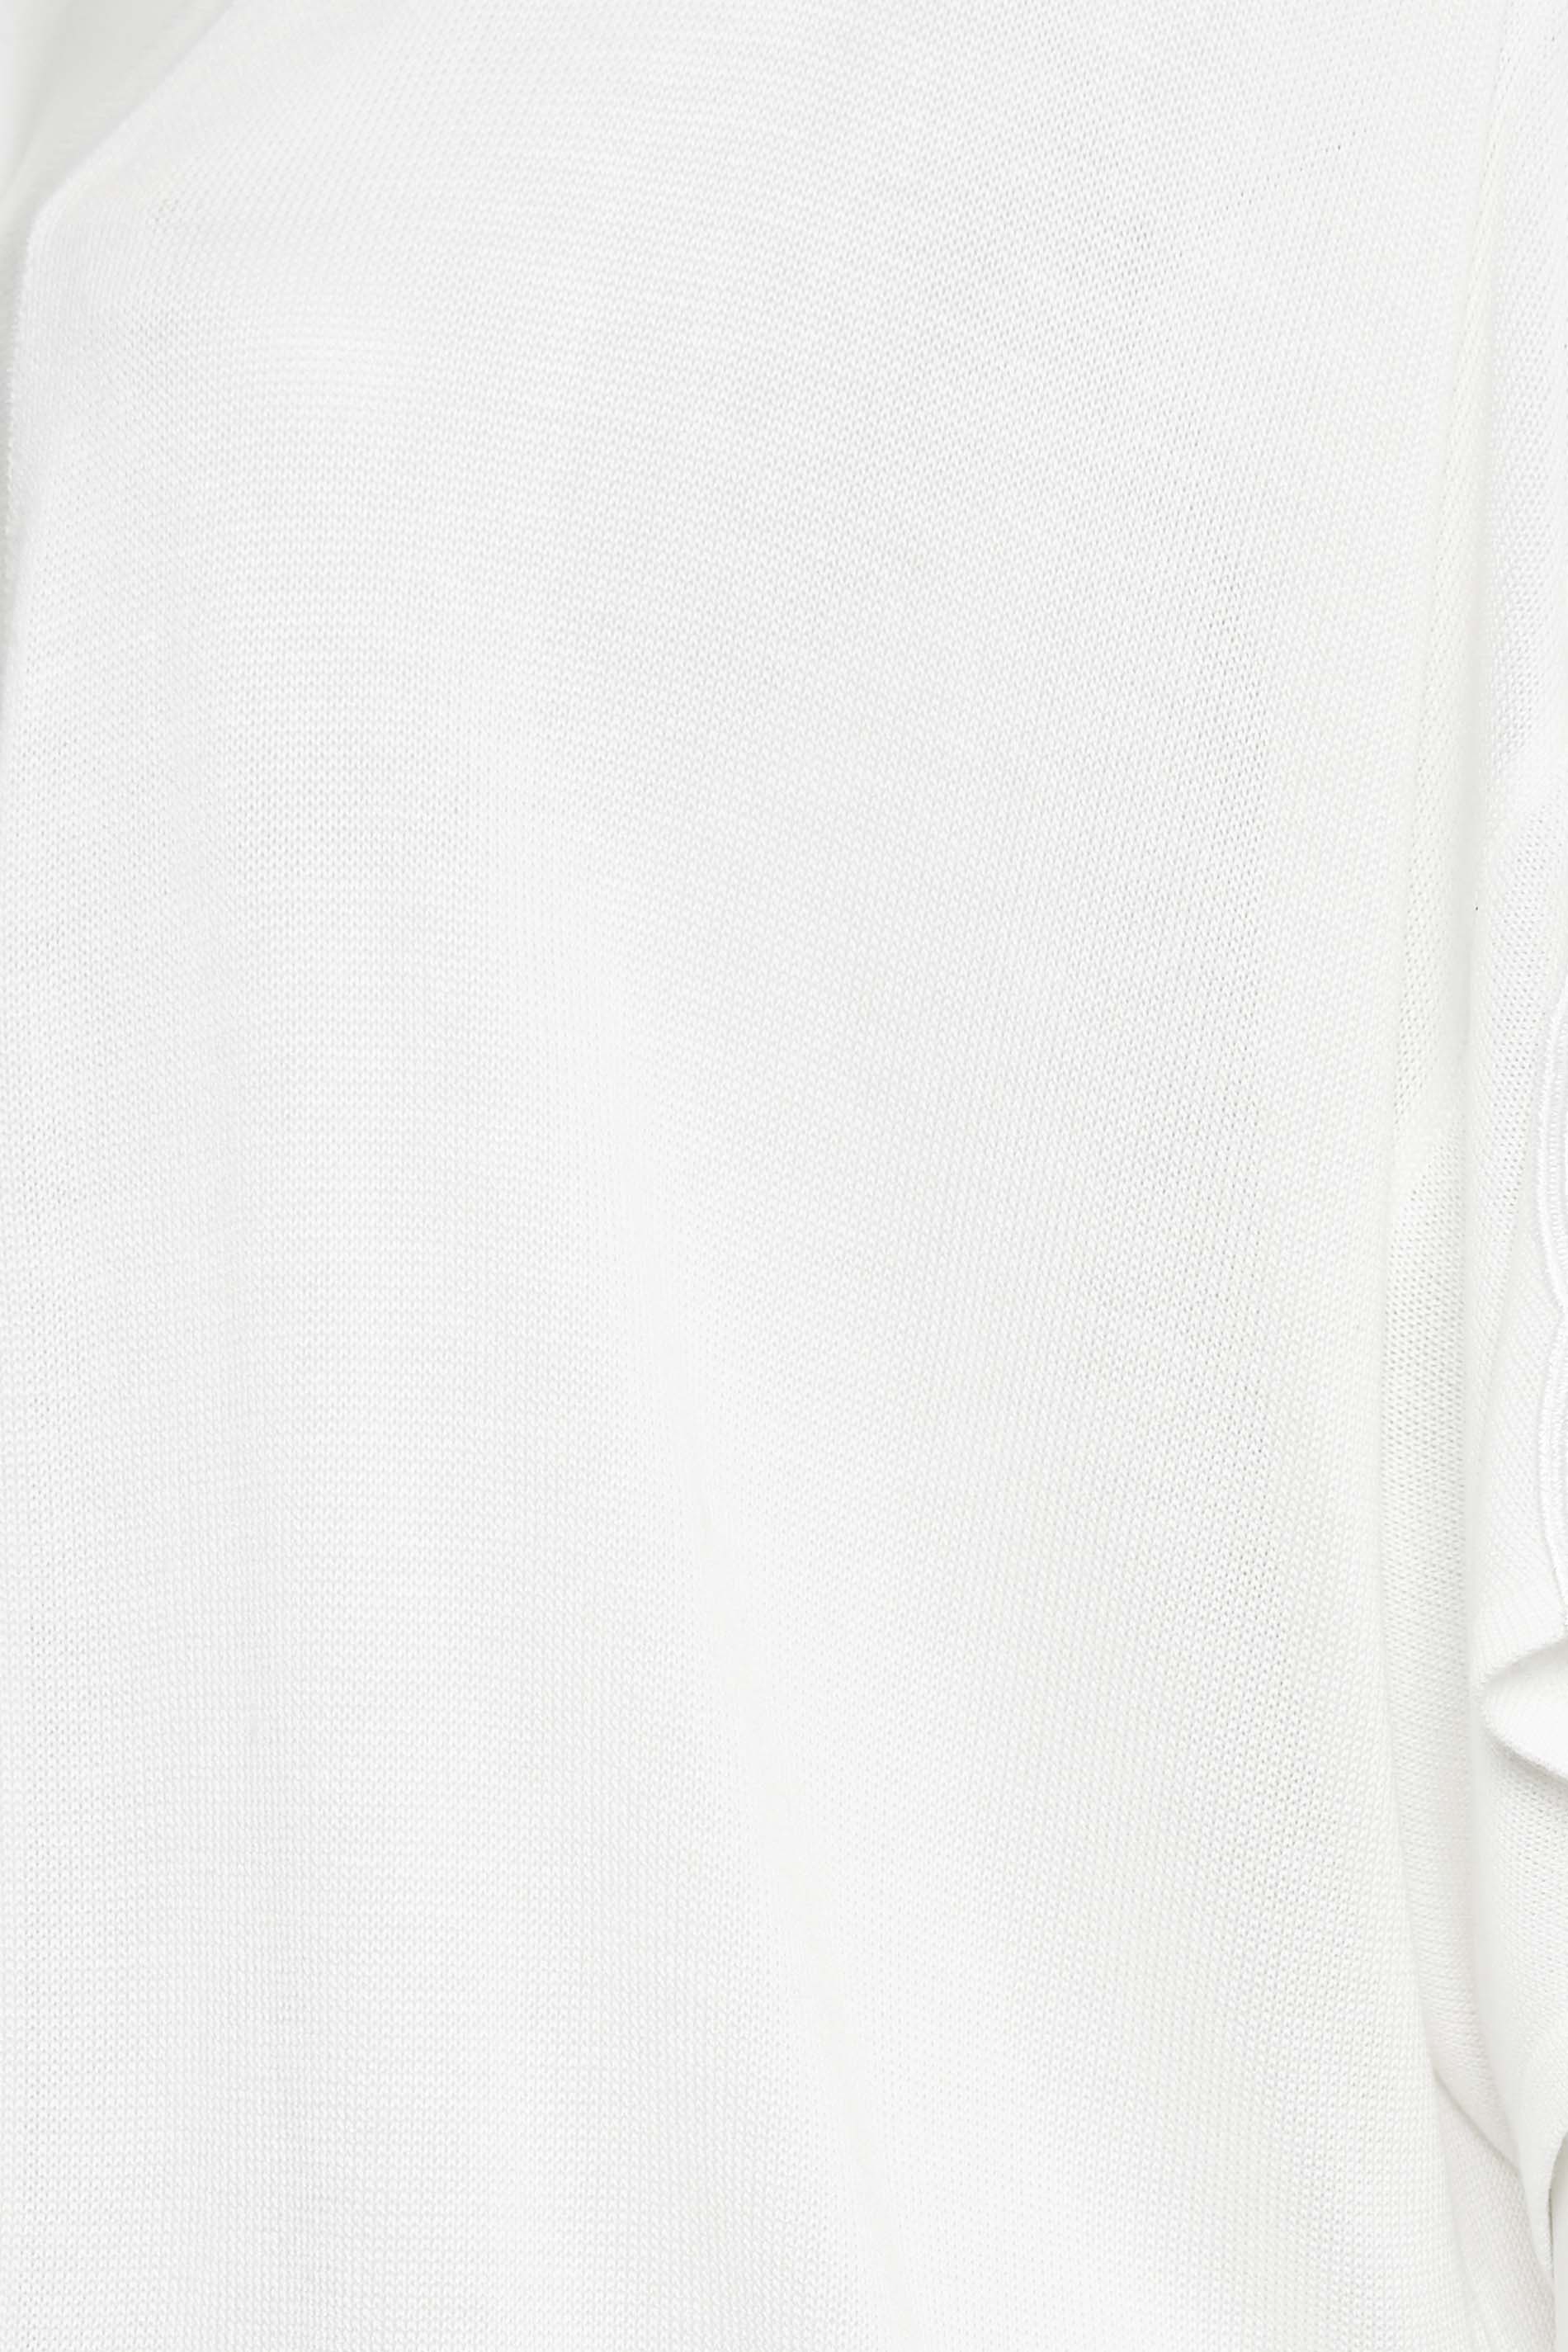 YOURS Plus Size White Crochet Sleeve Kimono | Yours Clothing